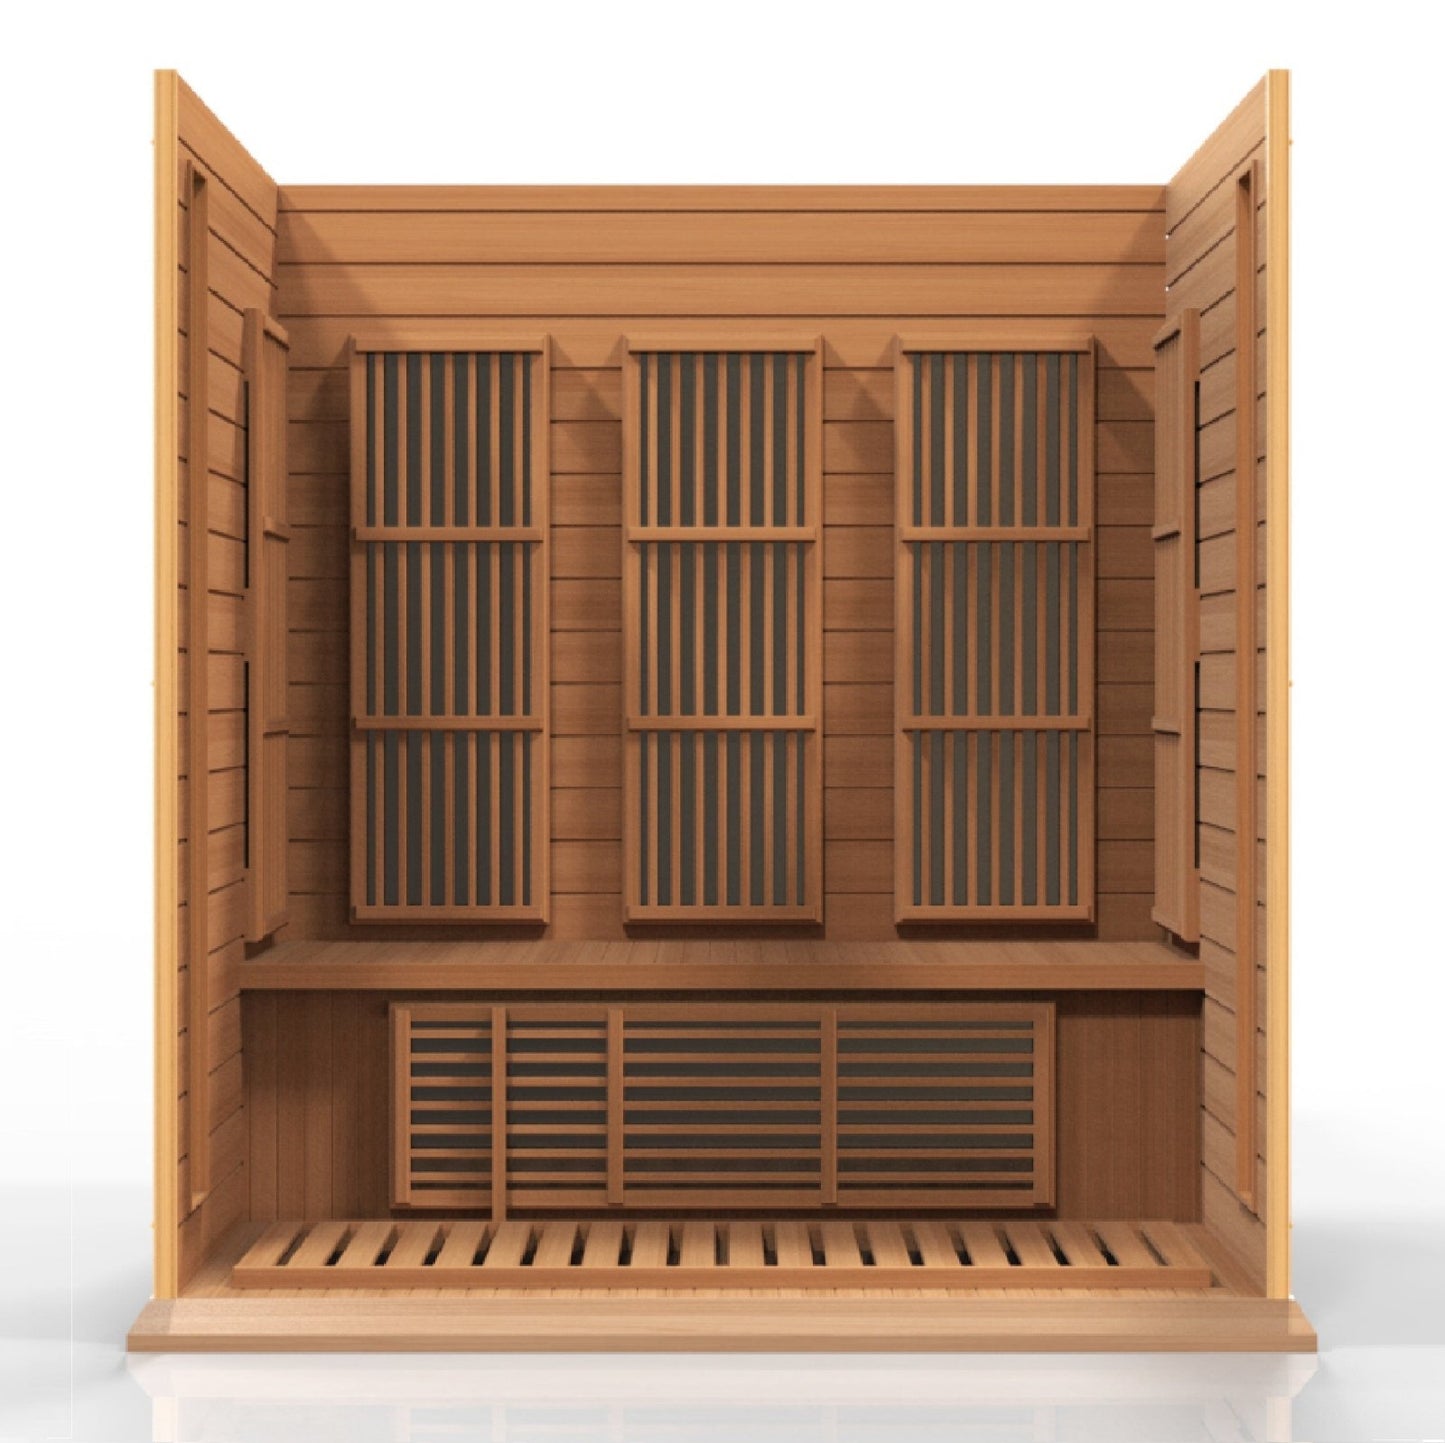 Golden Design Low EMF 3-Person Maxxus FAR Infrared Sauna with Red Cedar Wood | Model: MX-K306-01 CED - MX-K306-01 CED